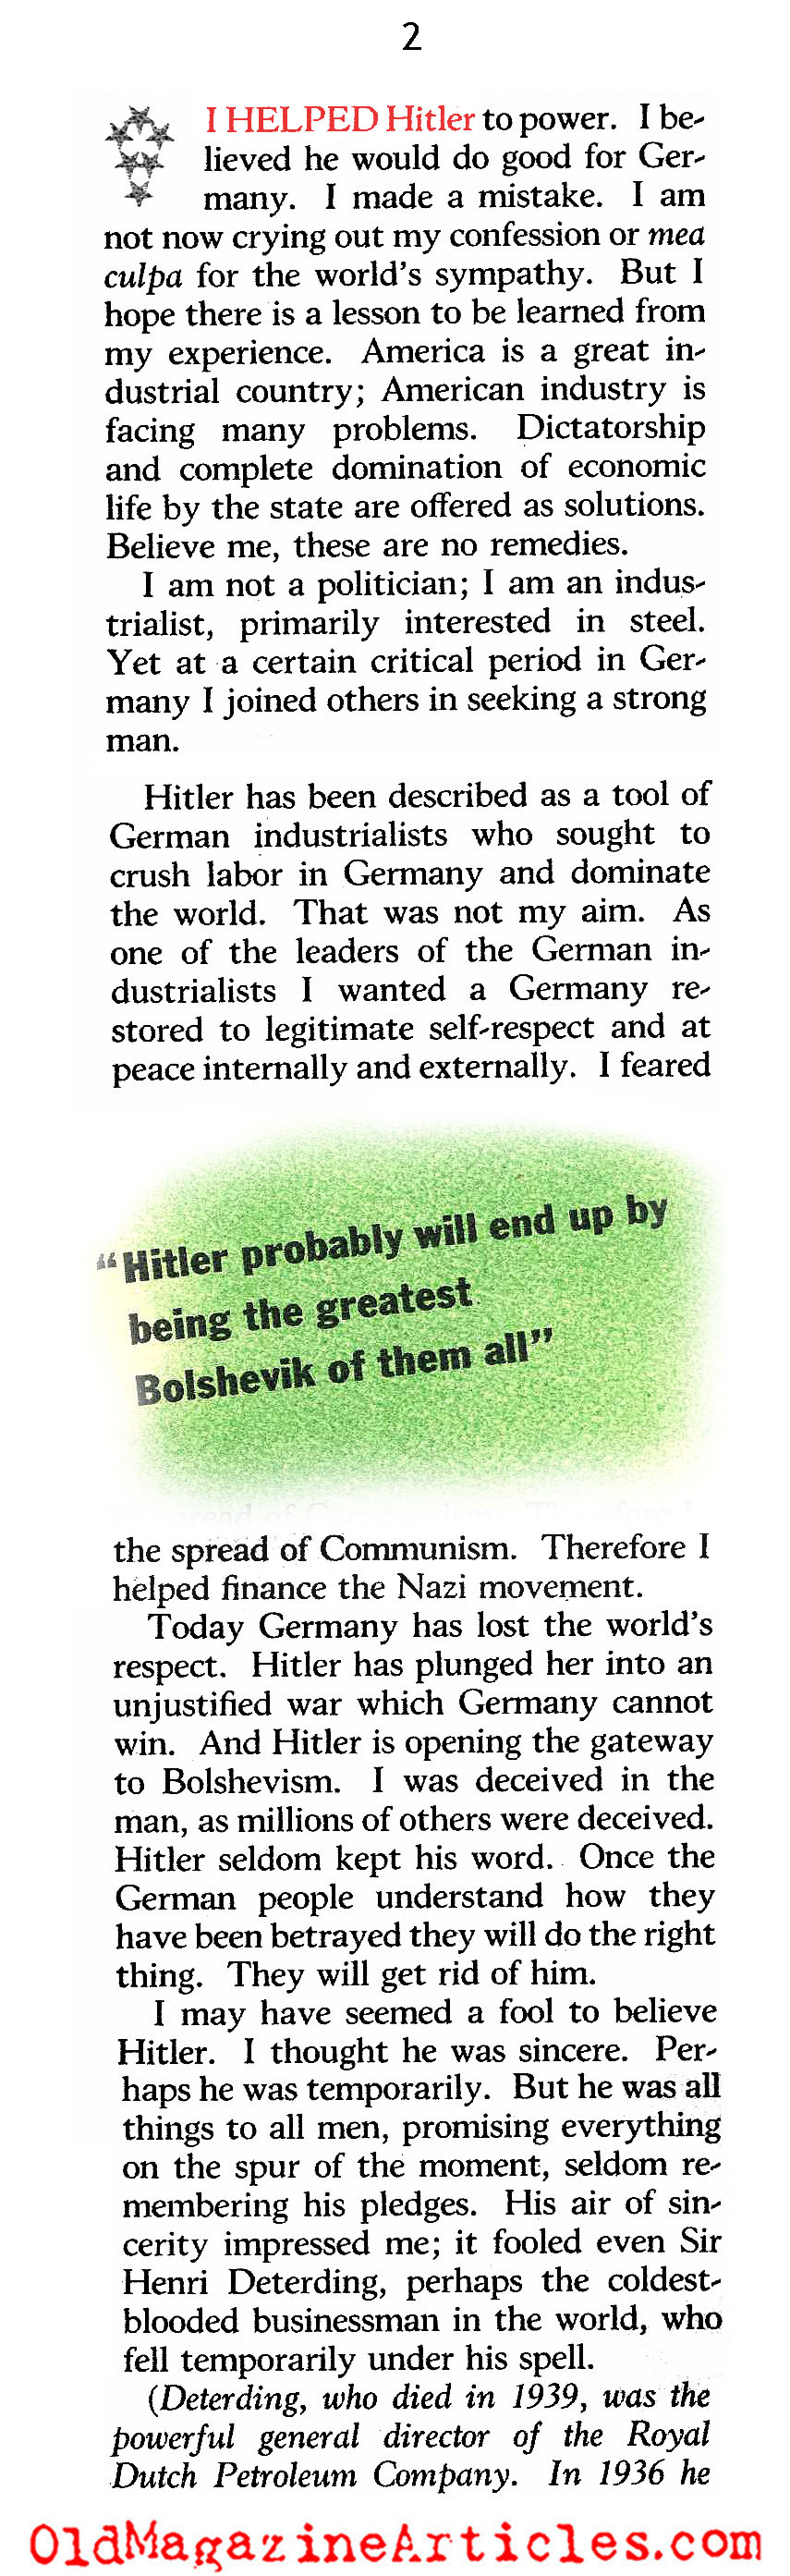 ''I Backed Hitler'' (American Magazine, 1940)